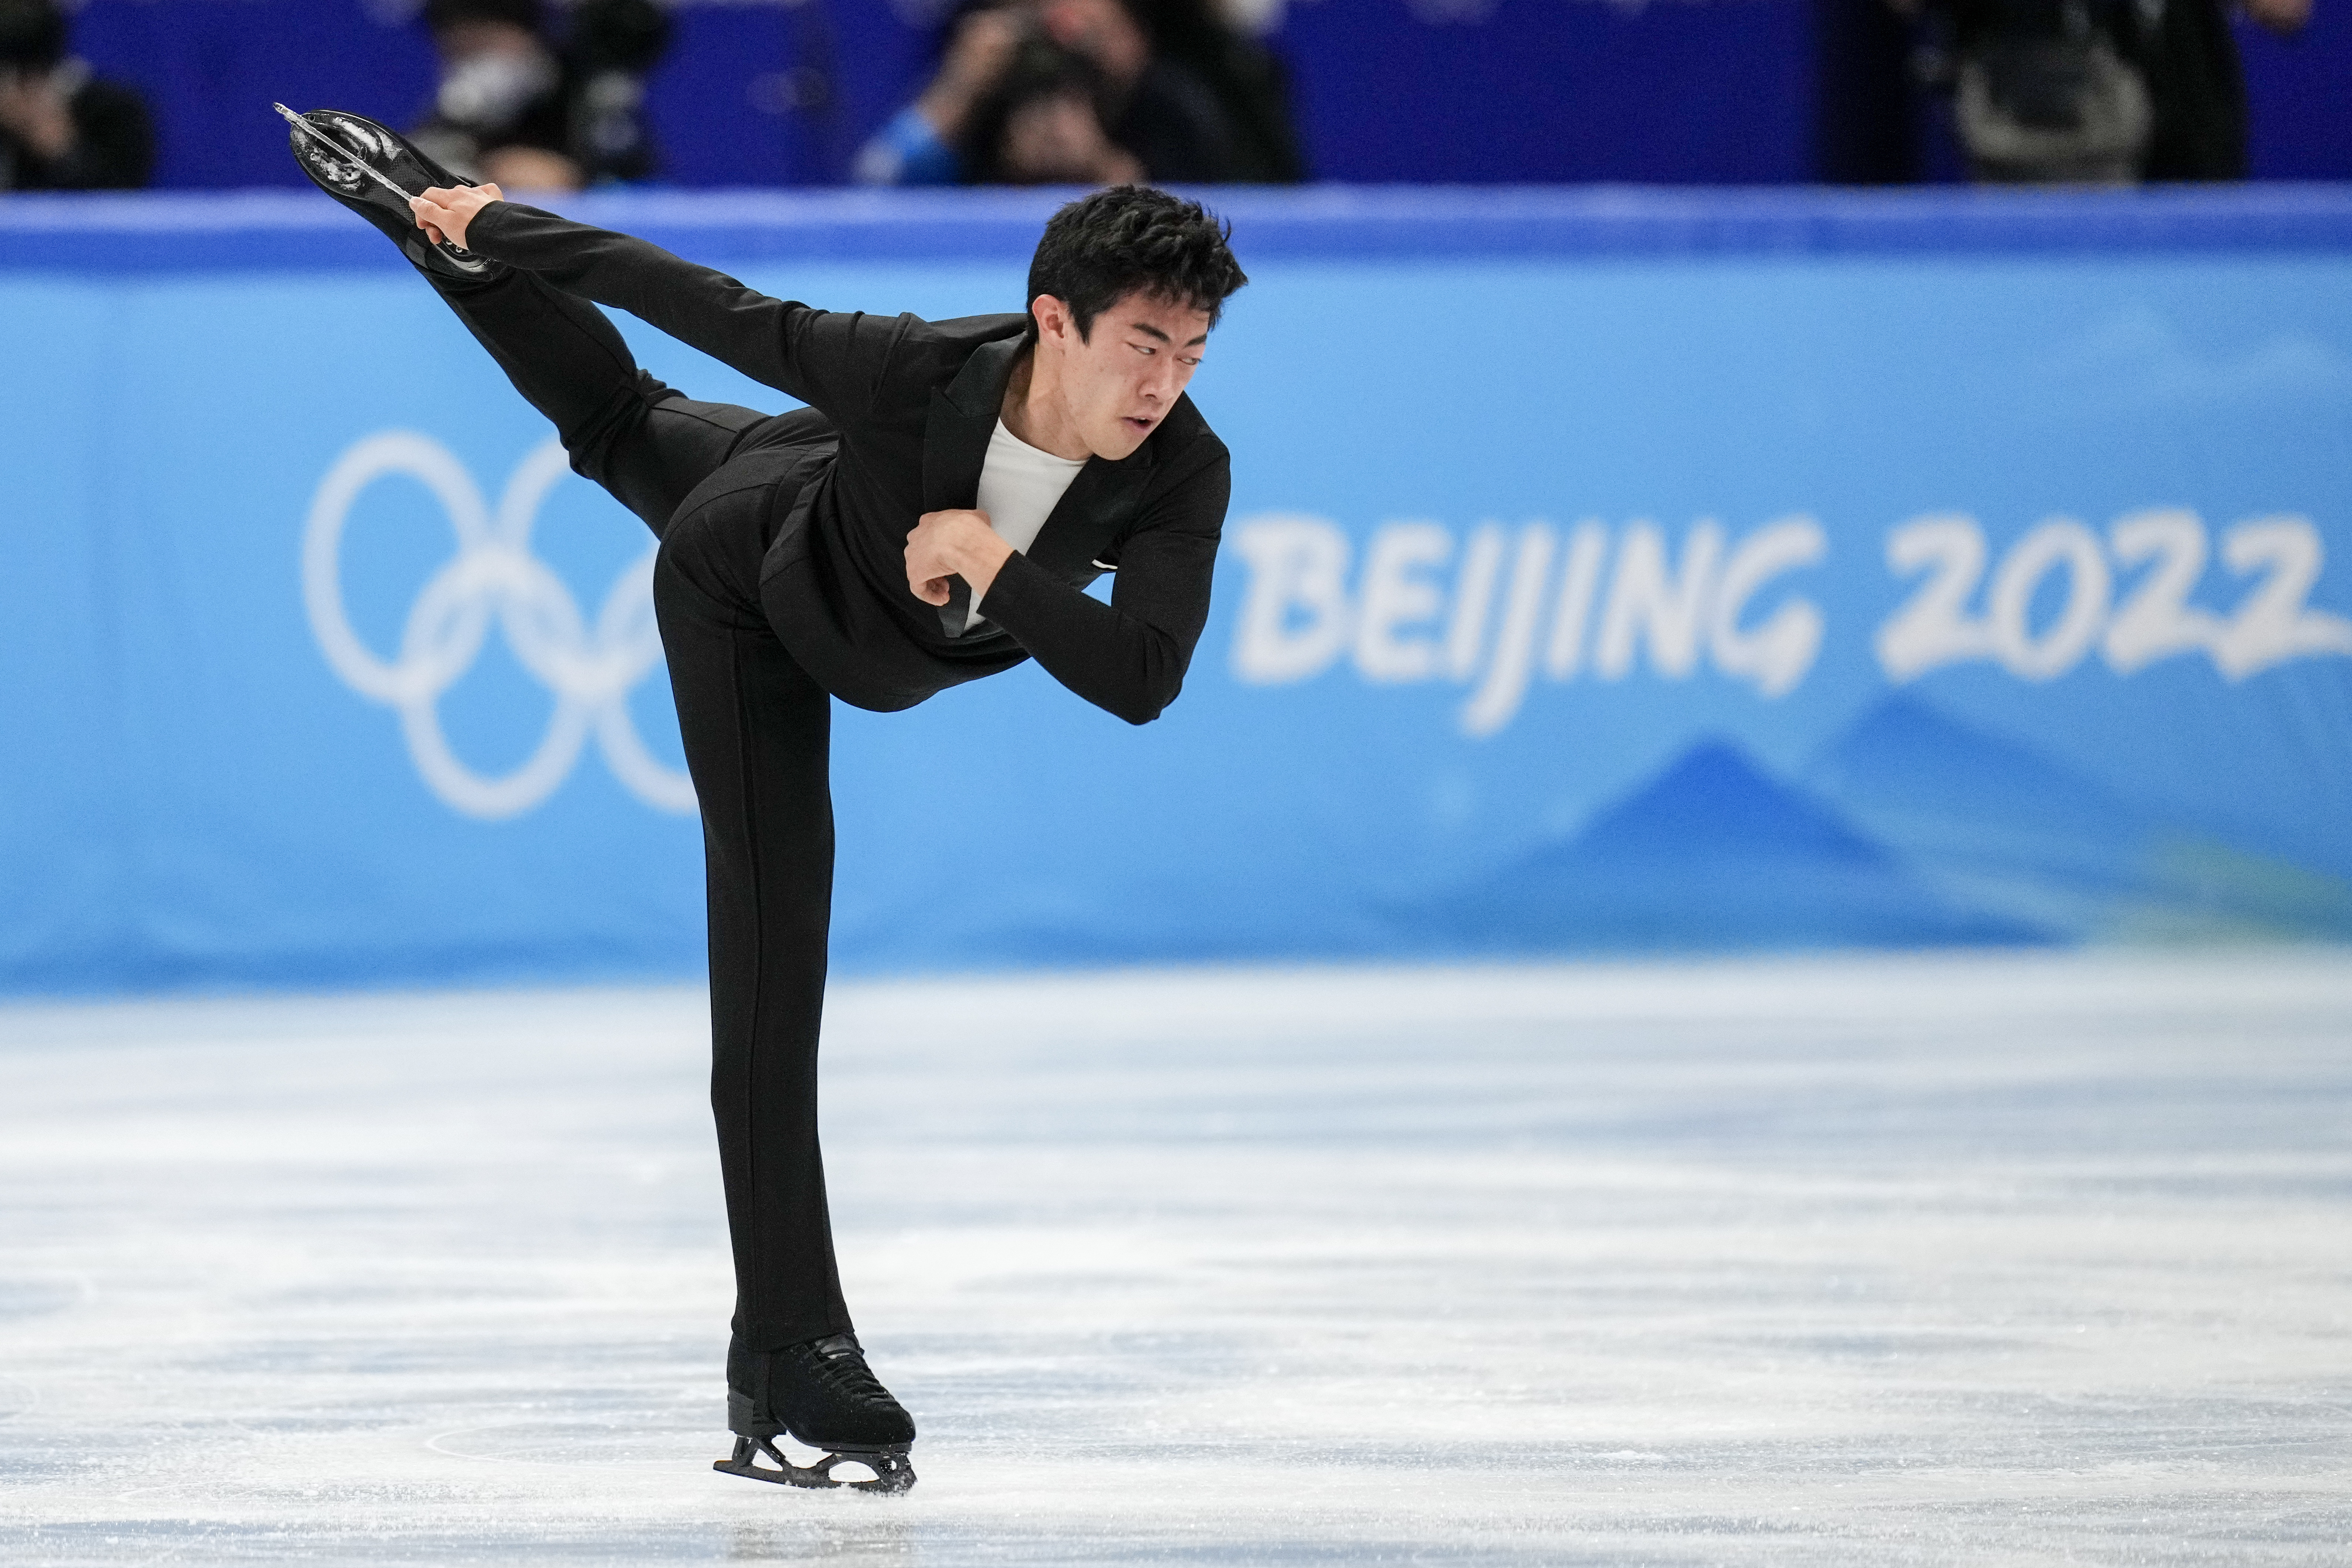 2022 Winter Olympics Nathan Chen breaks world record in mens figure skating short program